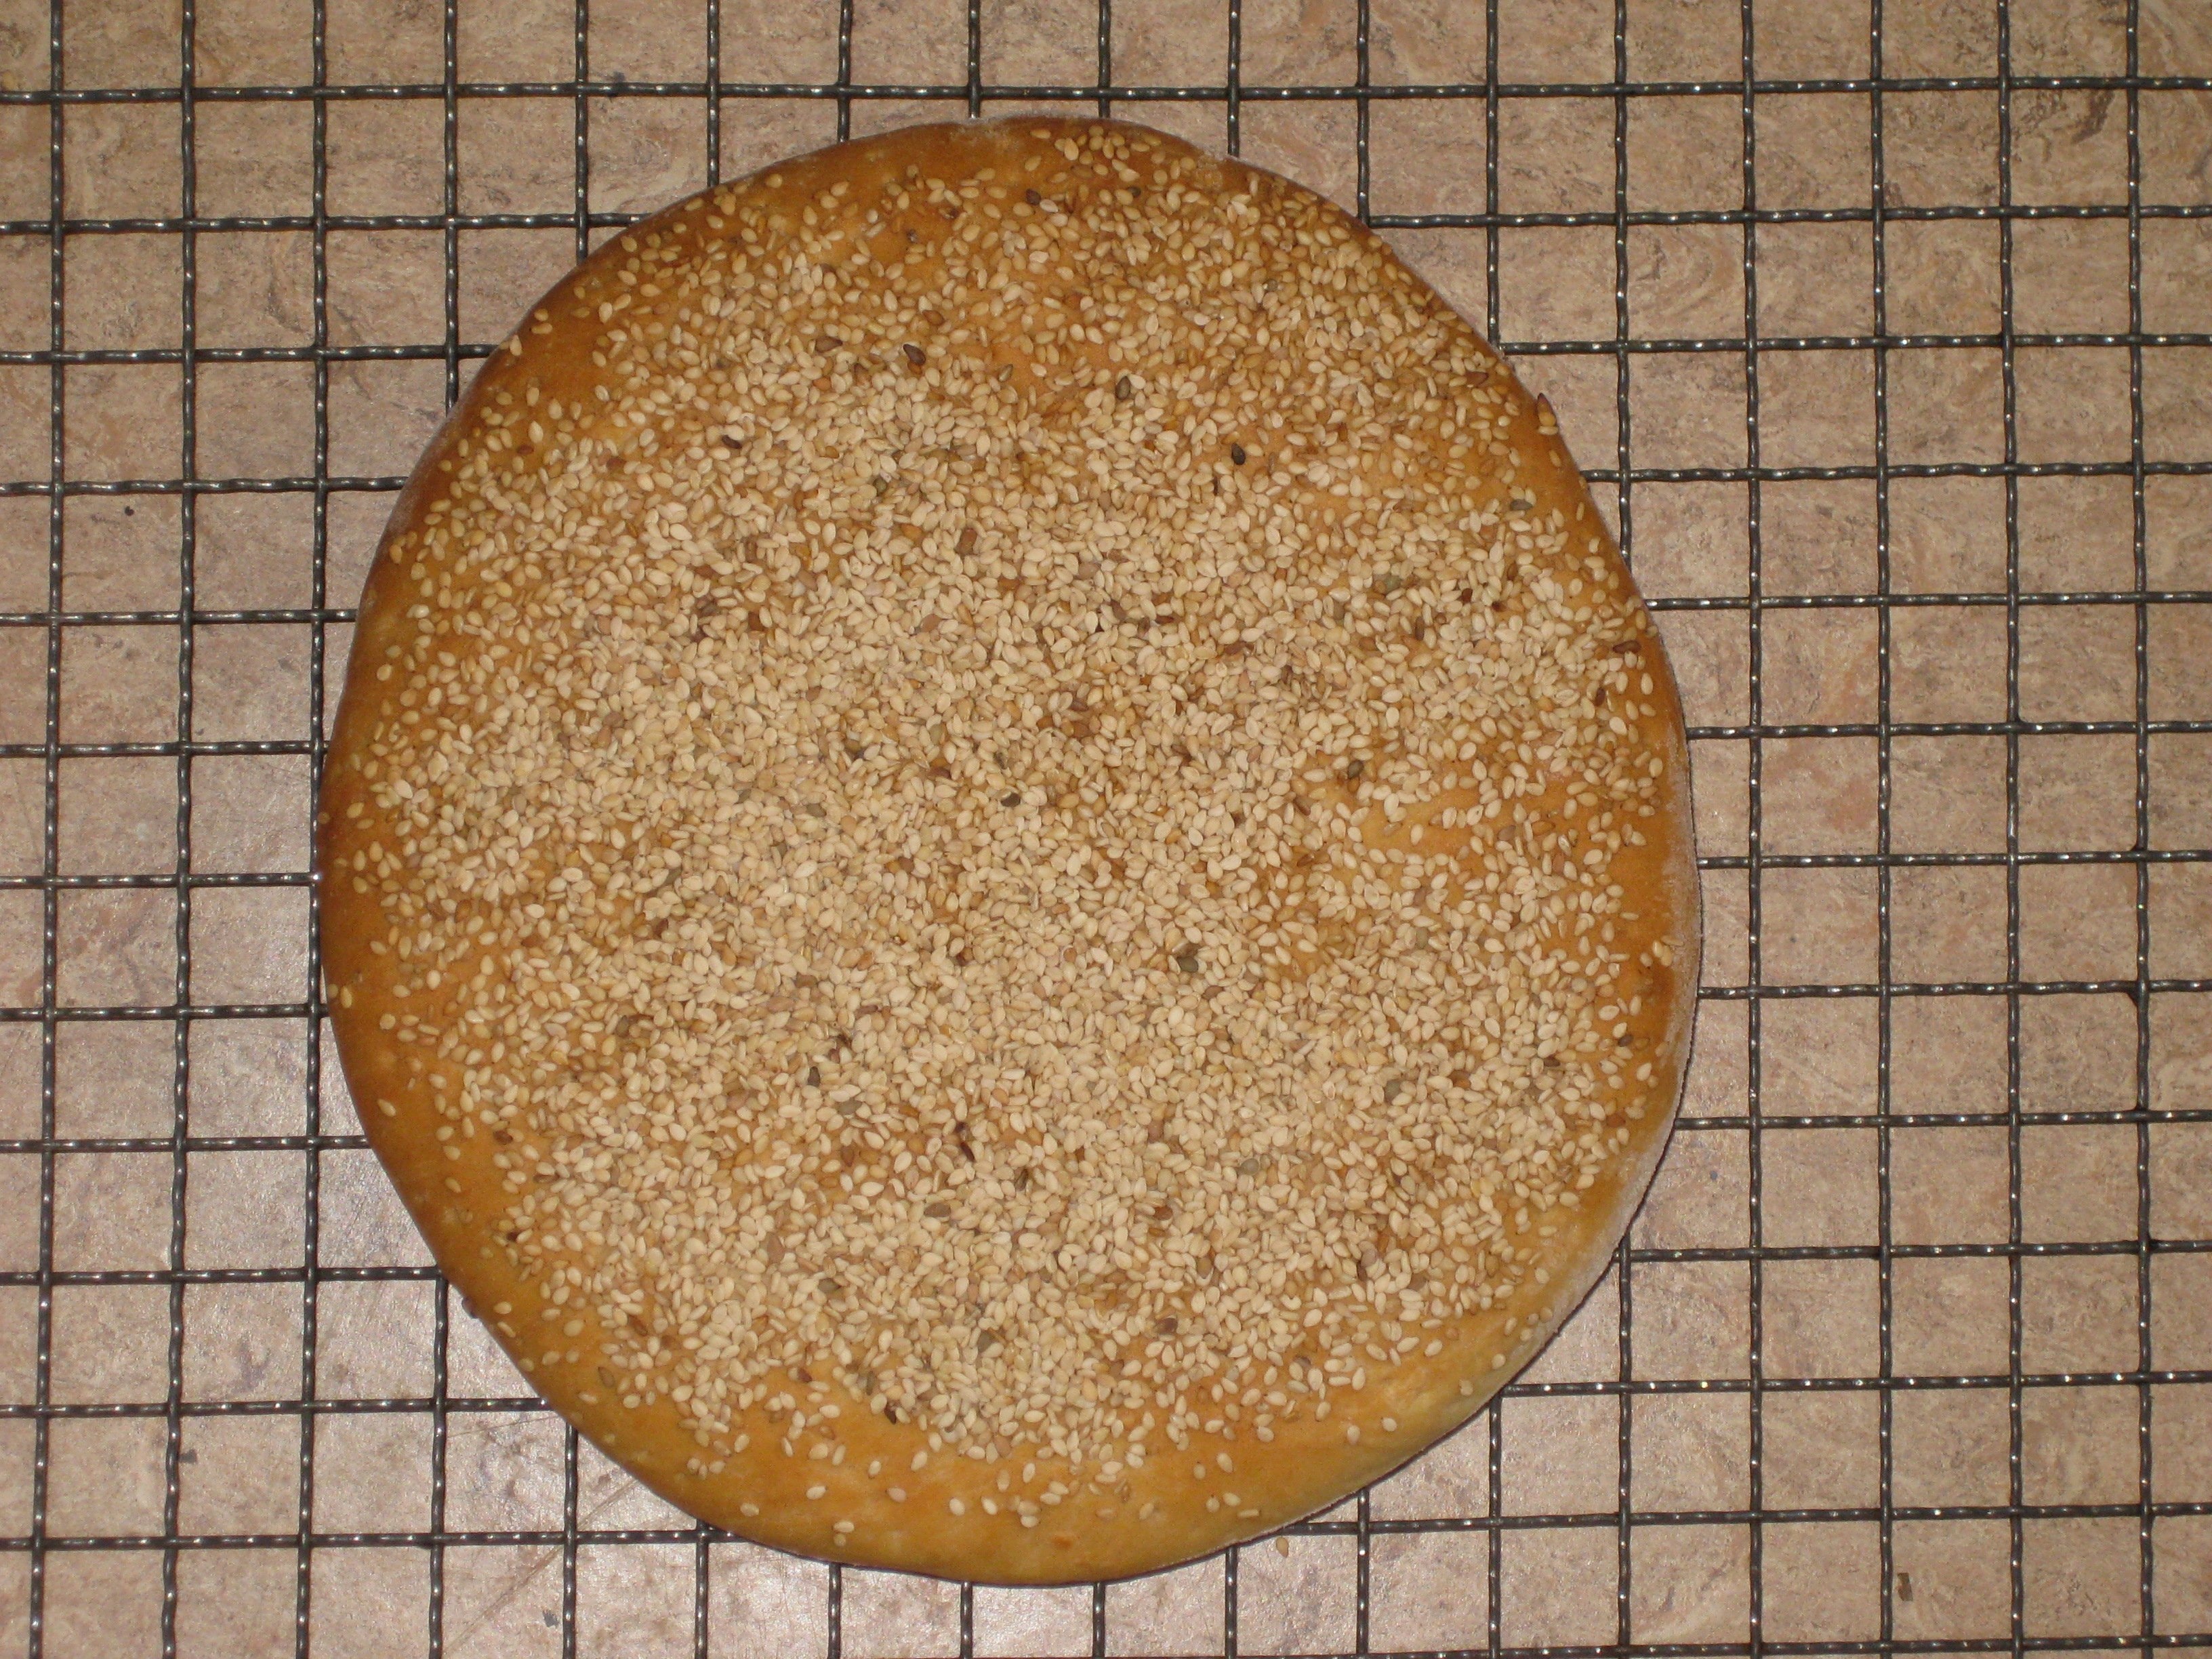 baked bun with sesame seeds